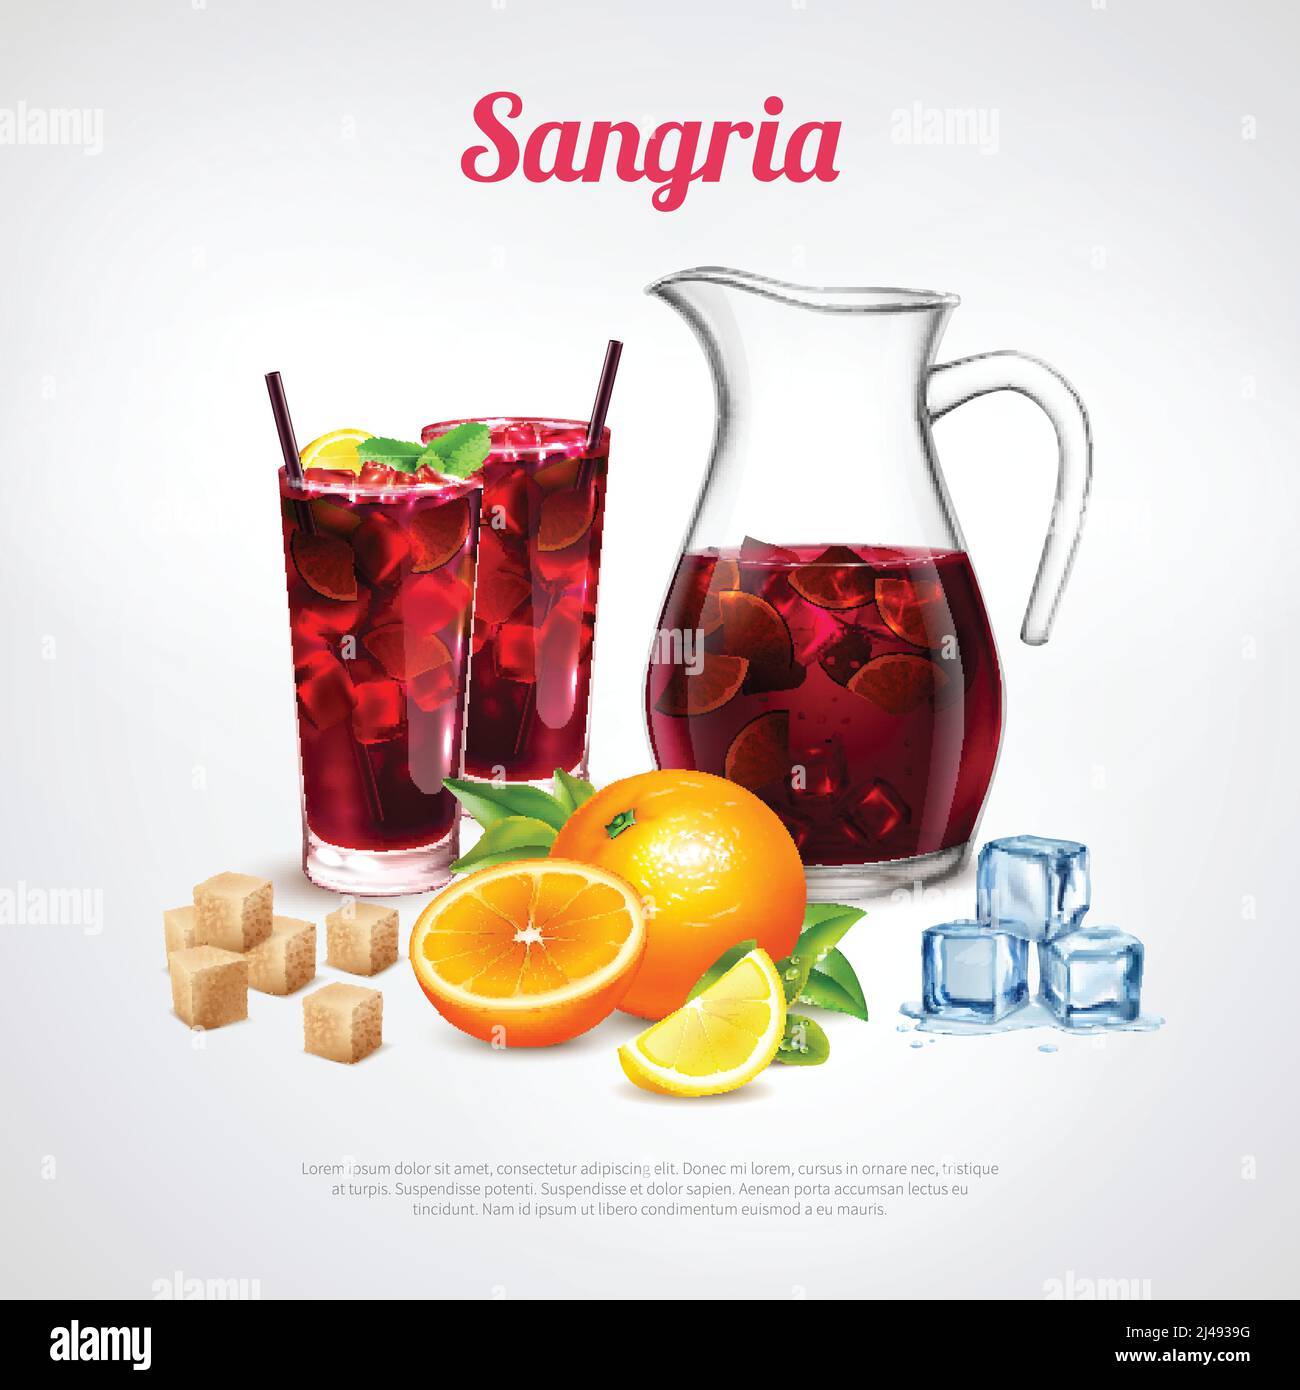 https://c8.alamy.com/comp/2J4939G/cocktails-realistic-poster-with-sangria-ingredients-and-jug-of-alcoholic-beverage-inside-vector-illustration-2J4939G.jpg